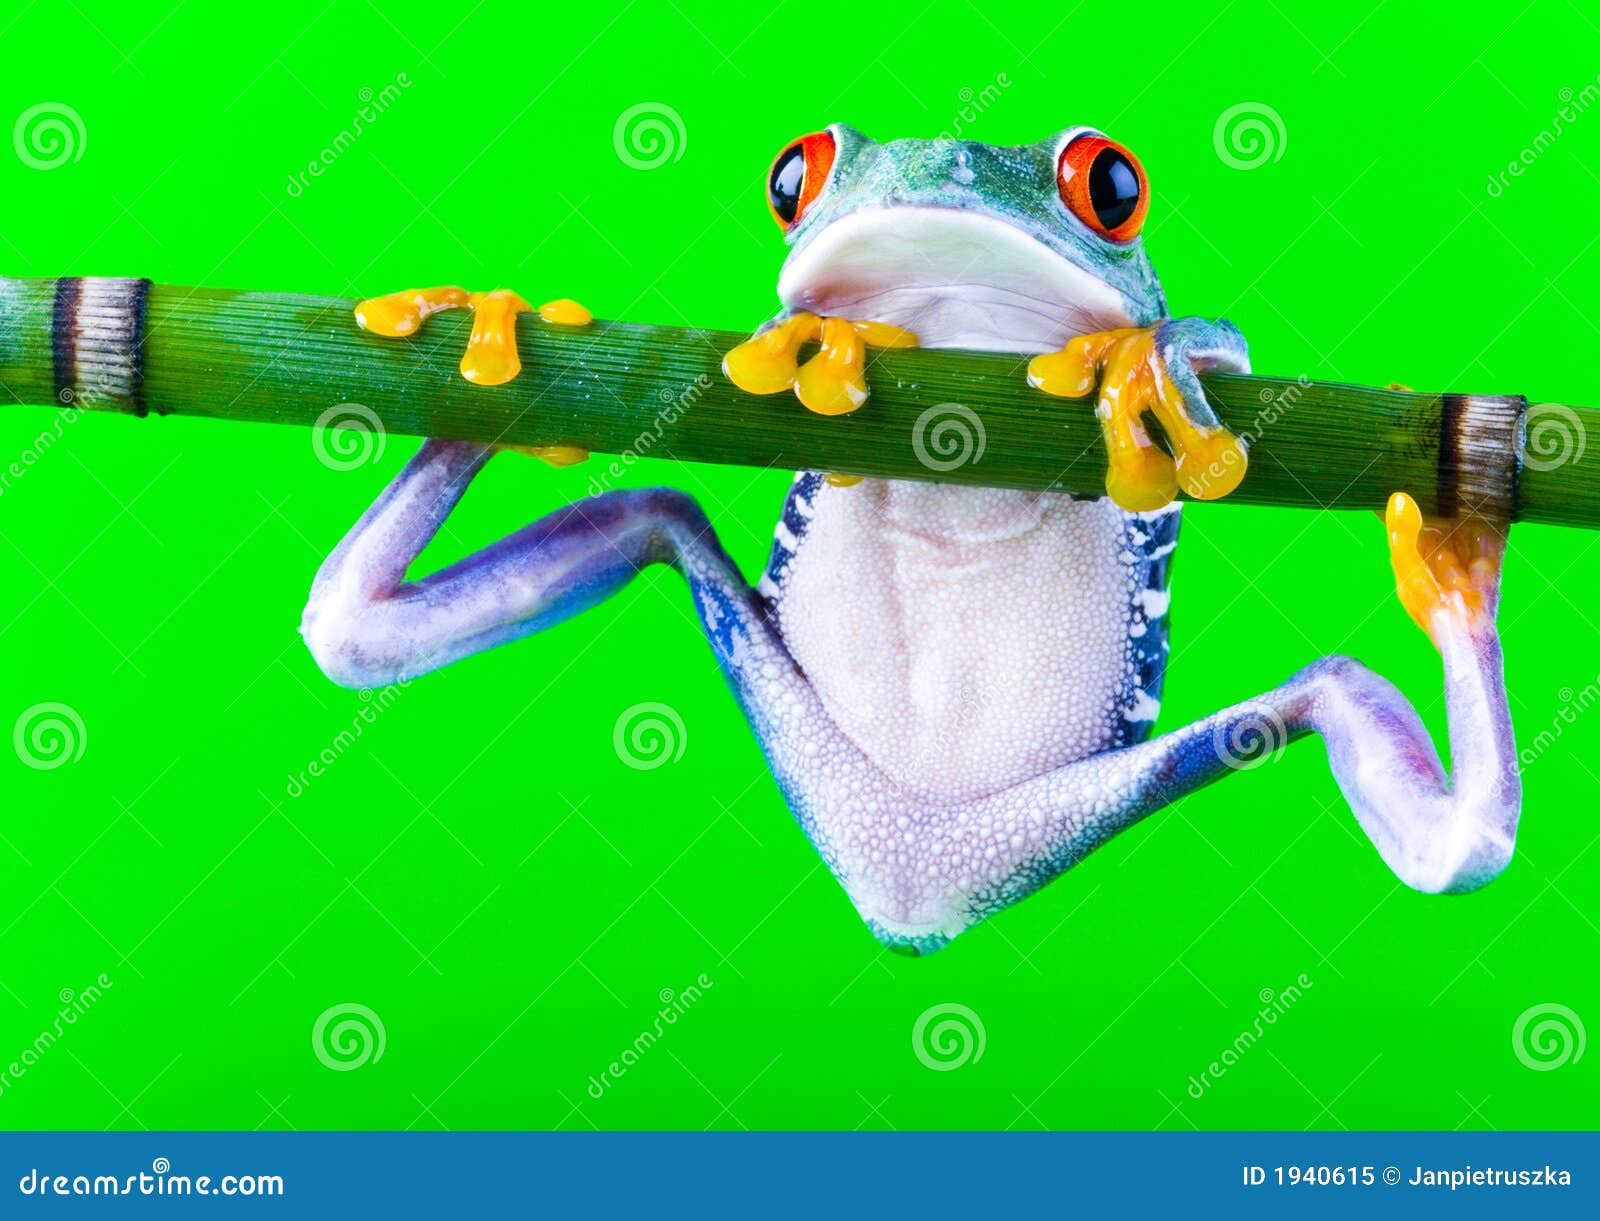 Crazy frog stock image. Image of adaptation, extinction - 1940615